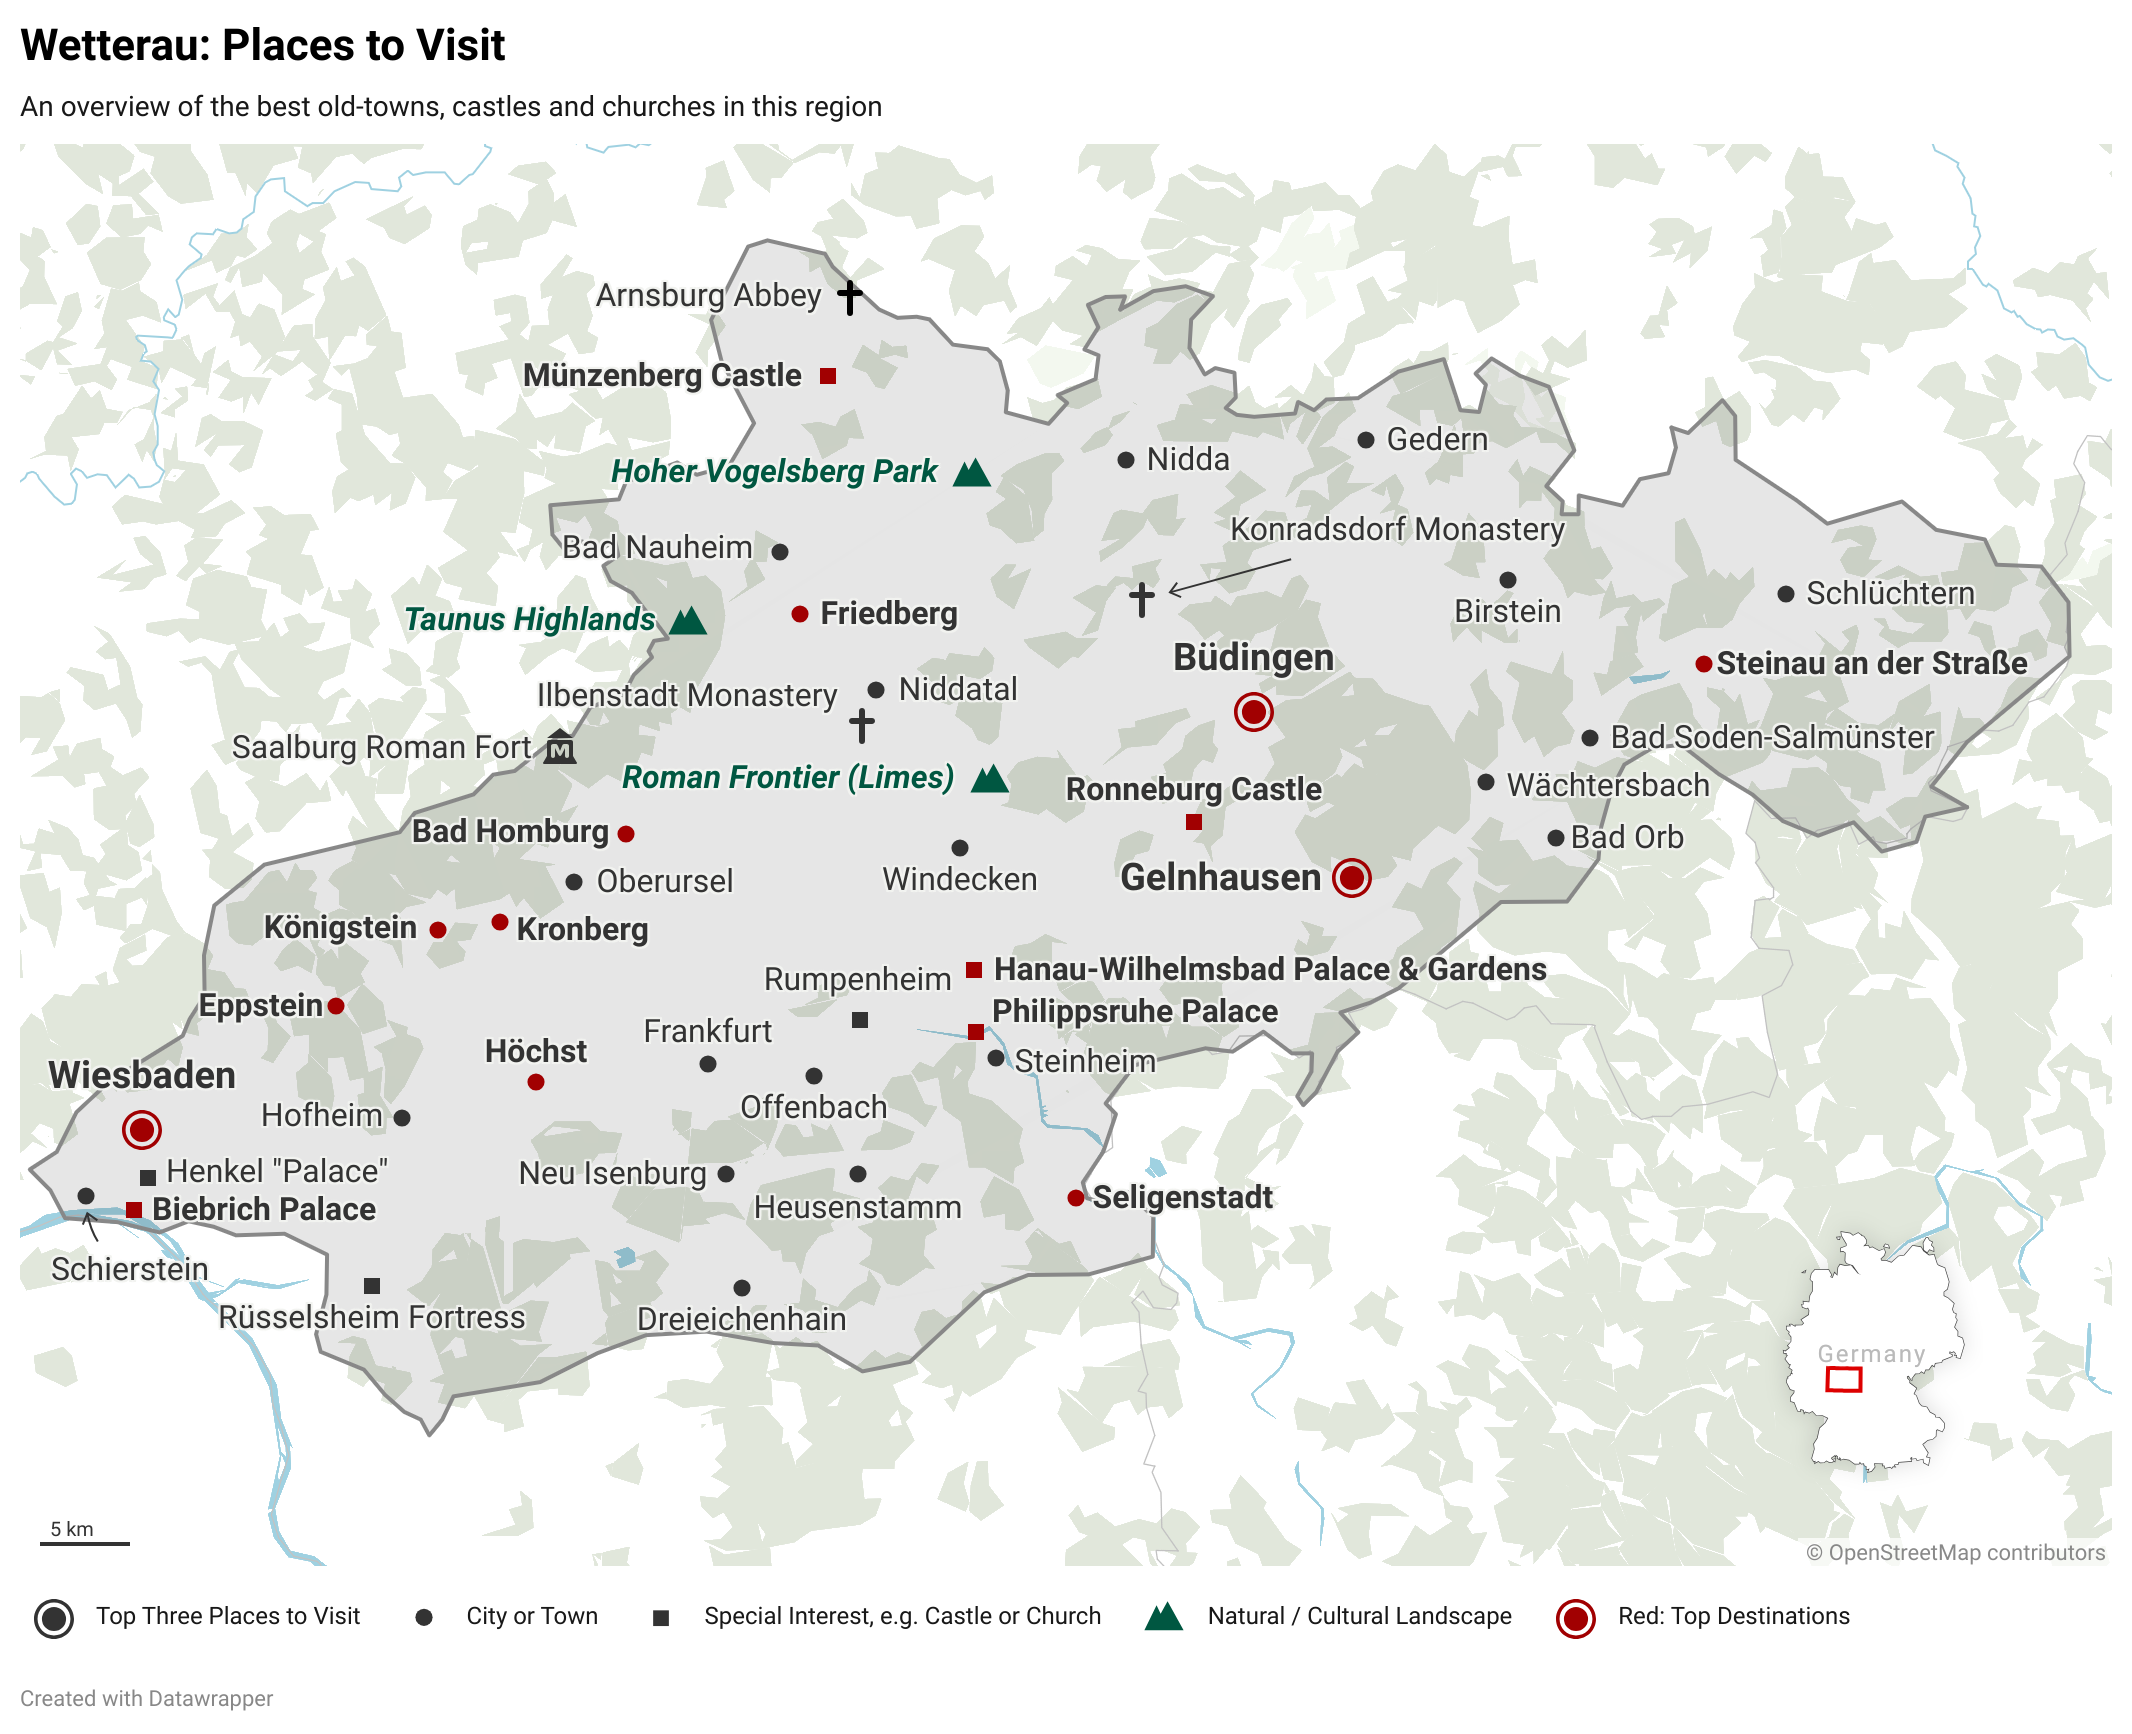 Wetterau: Places to Visit